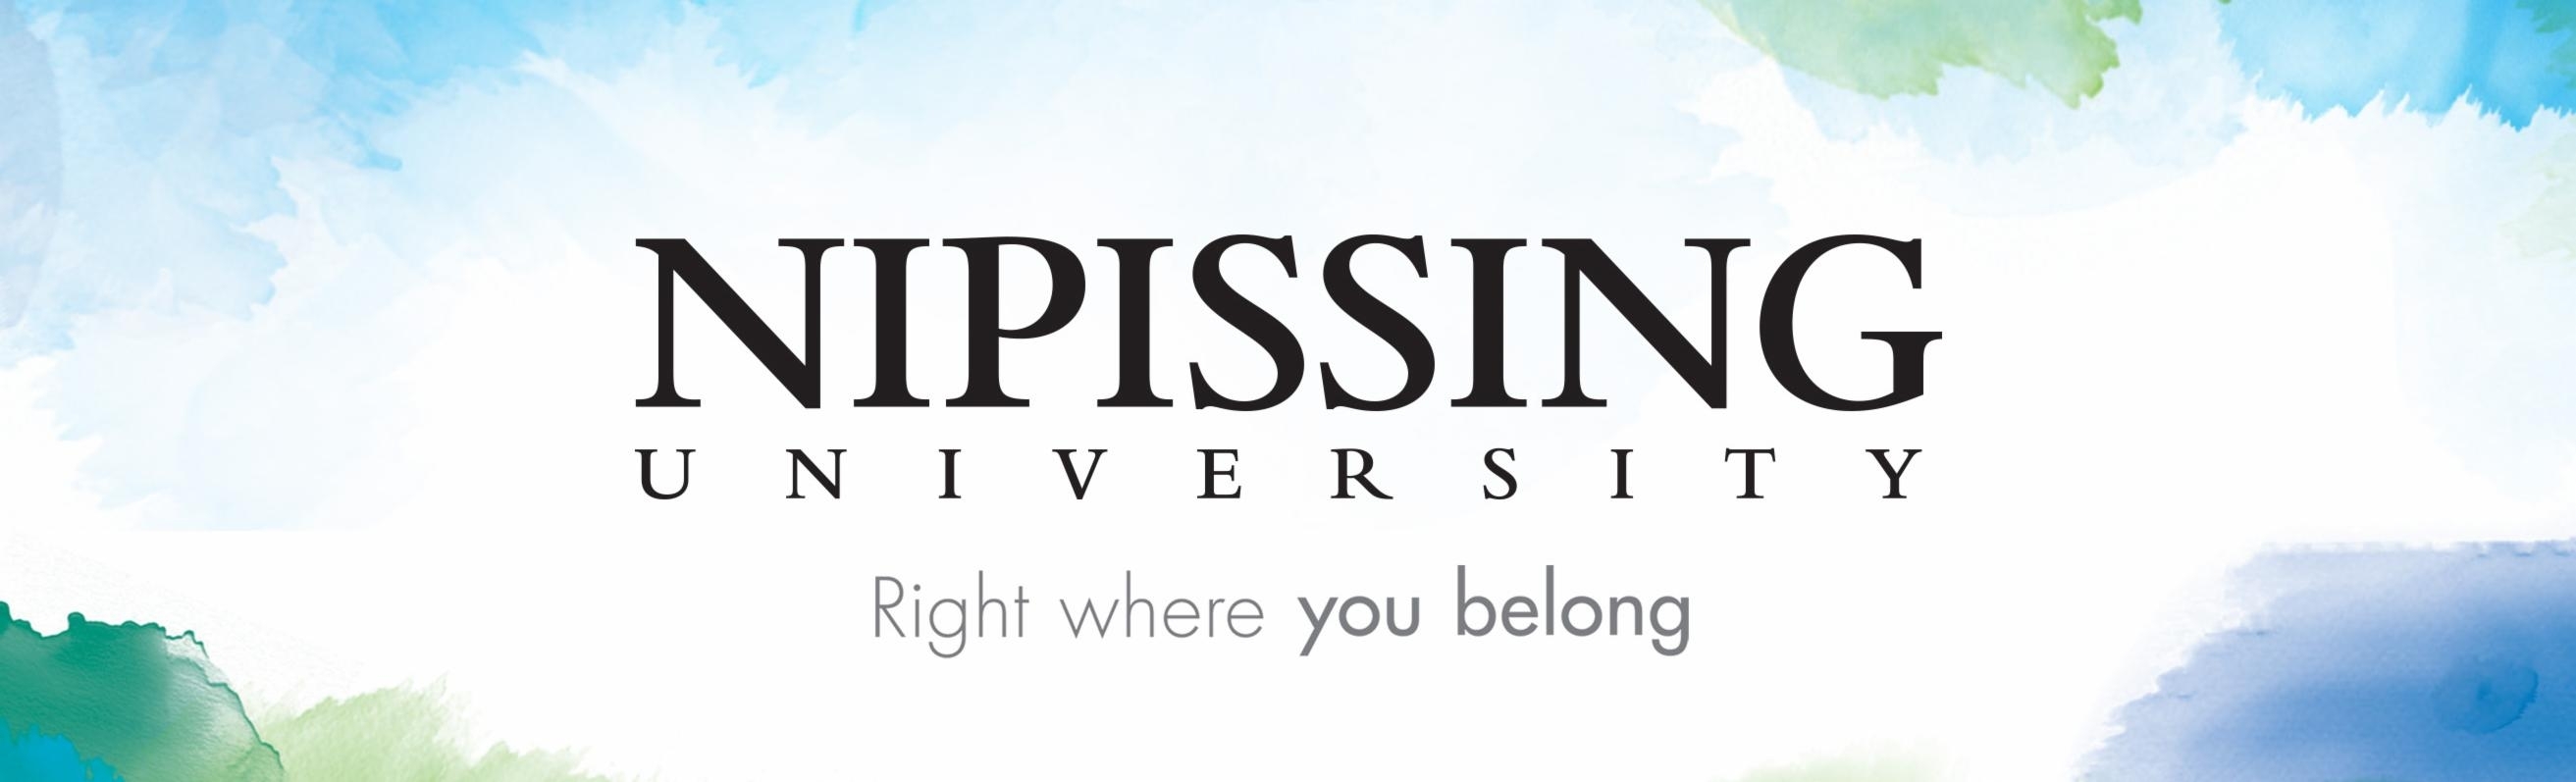 Nipissing University Right where you belong